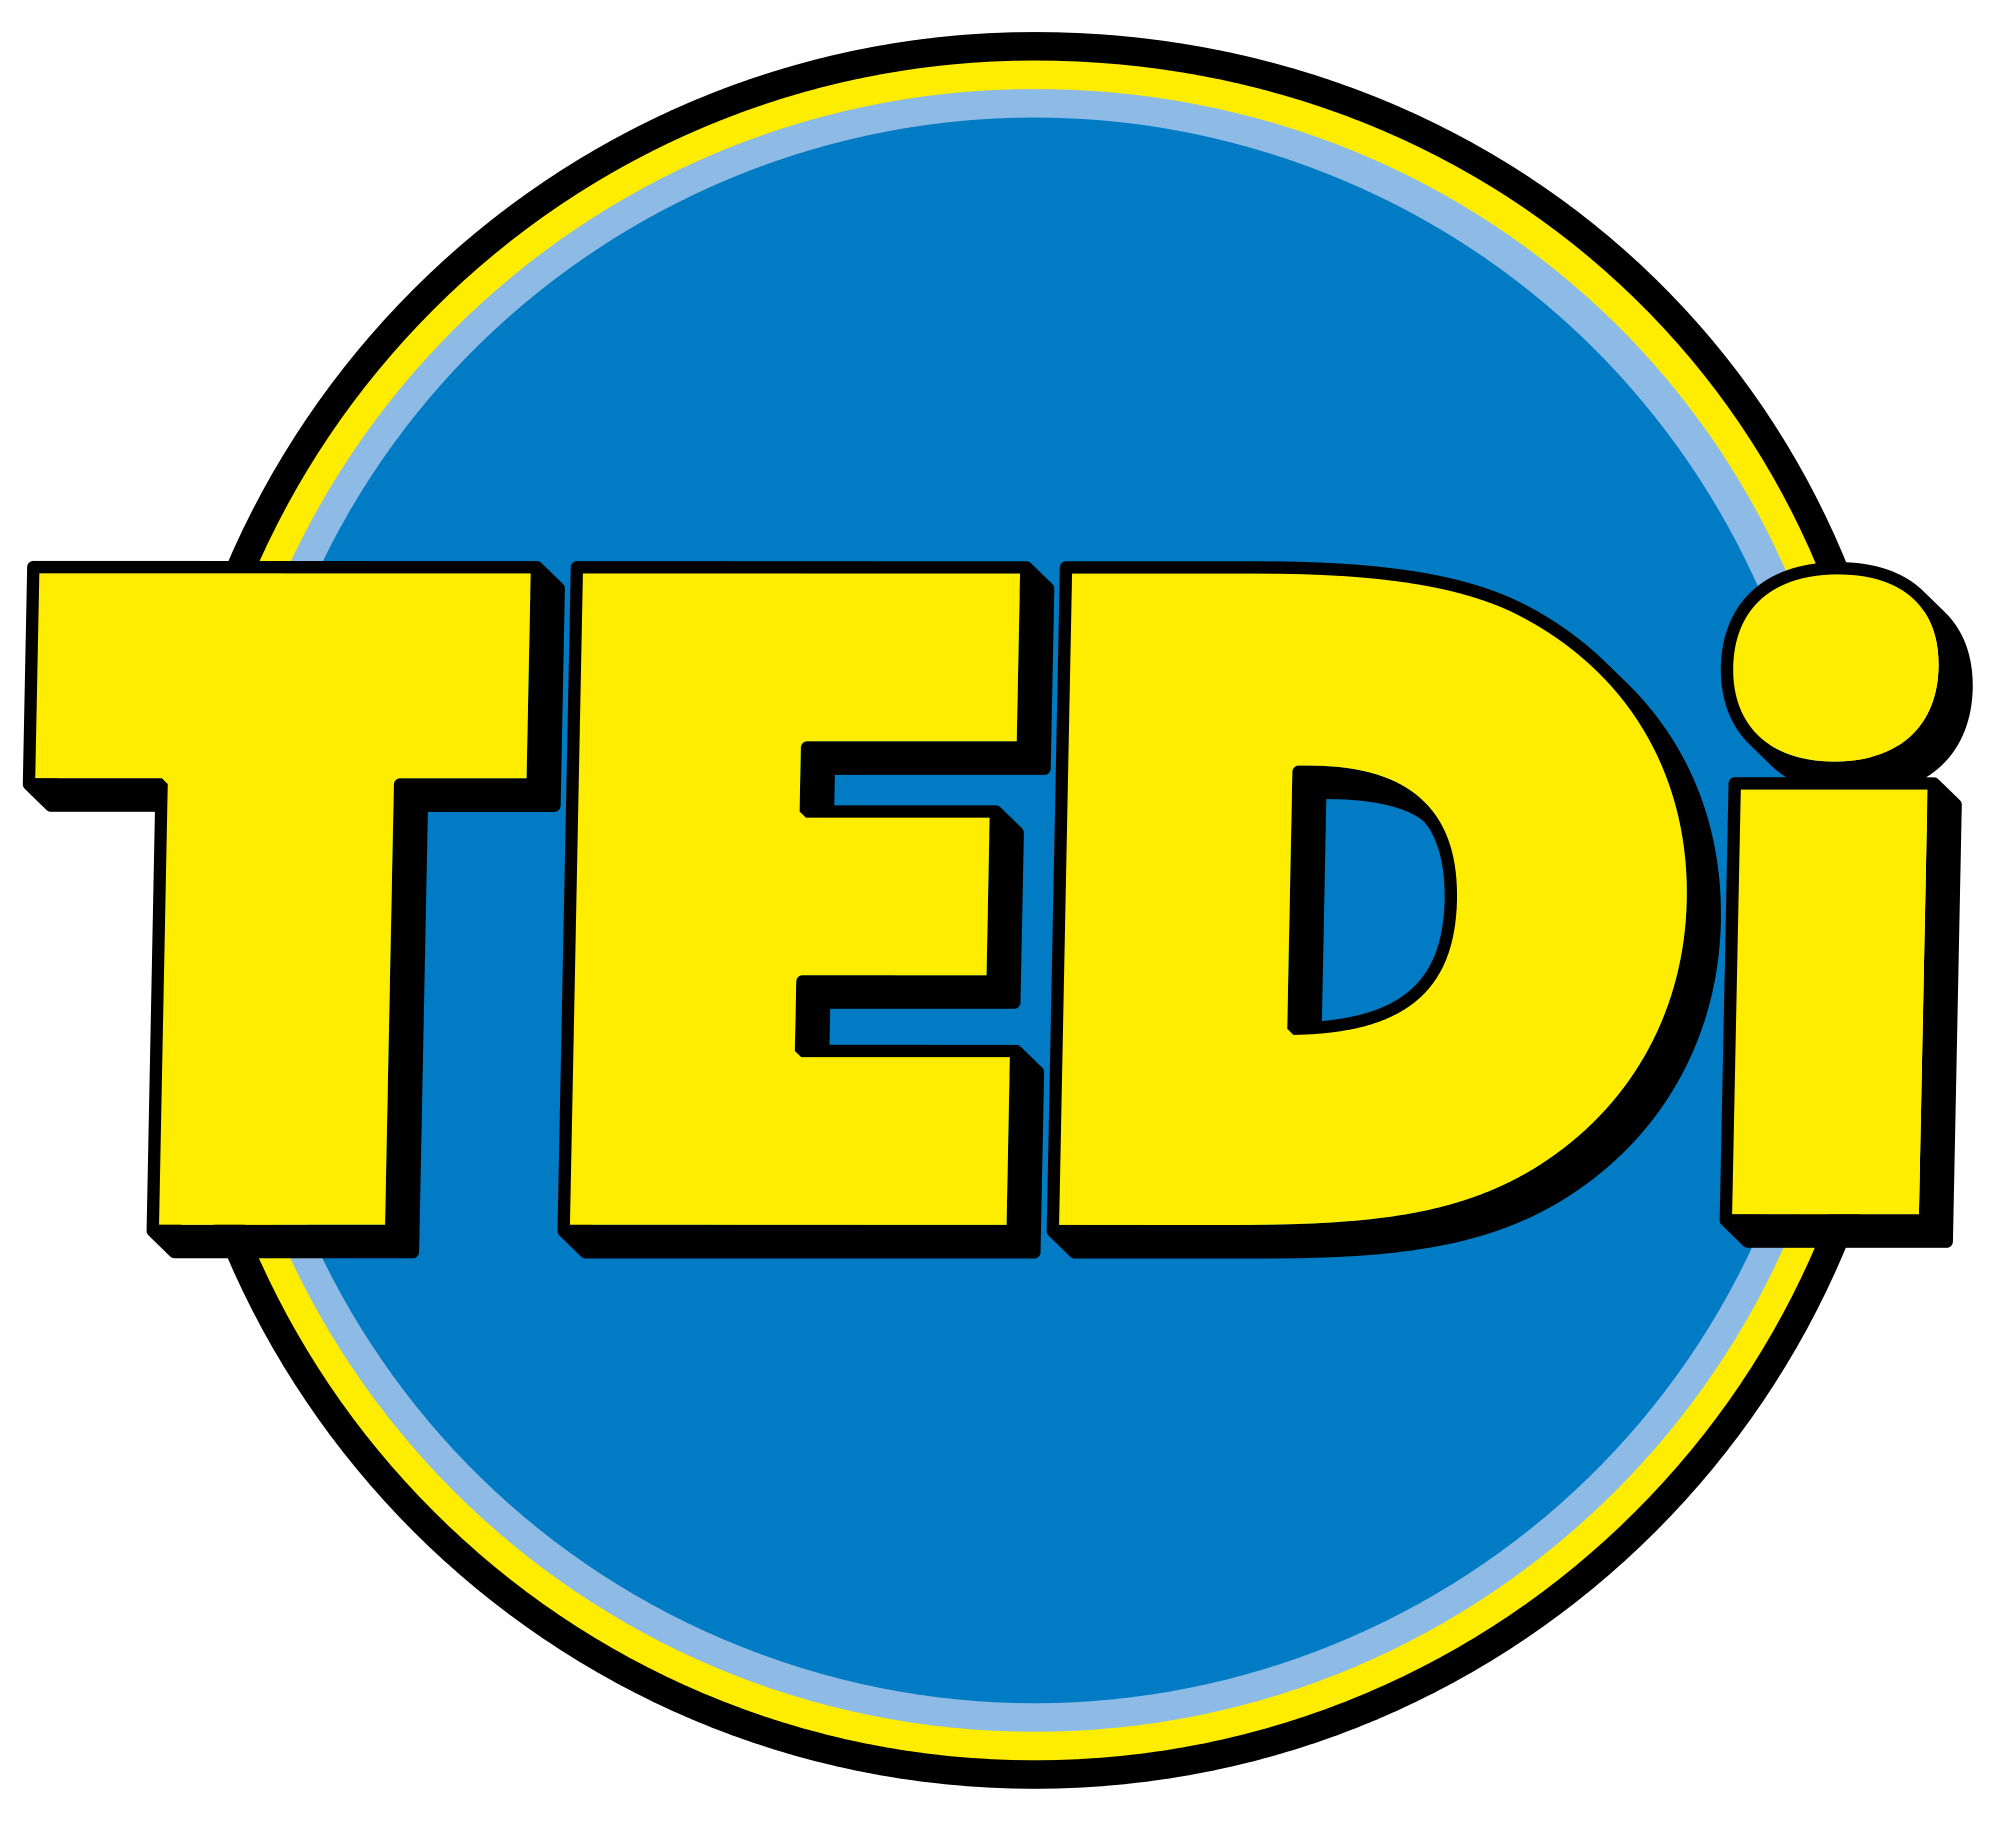 TEDi-Logo.svg